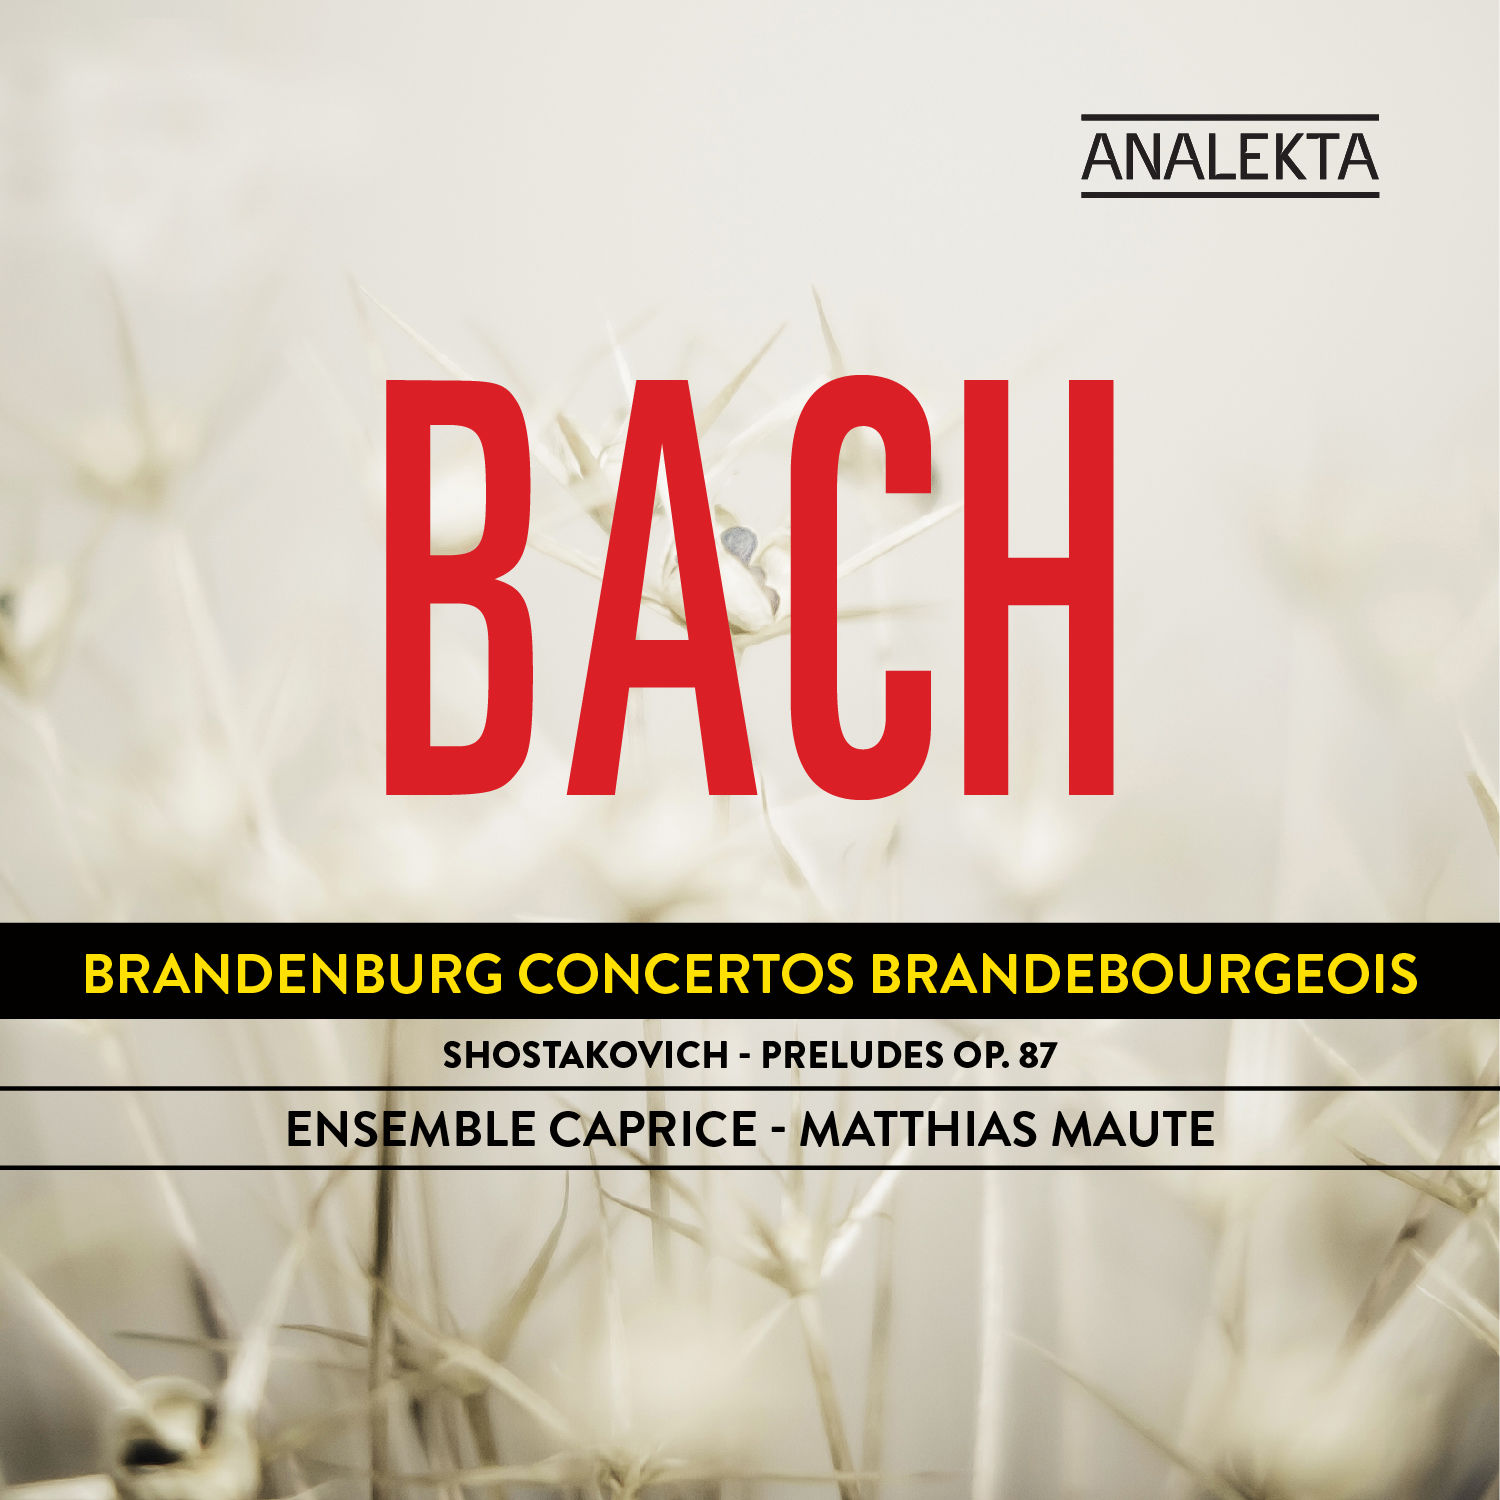 Bach - Brandenburgse Concerti. - Shostakovich Preludes Op. 87 cd2 24-88.2